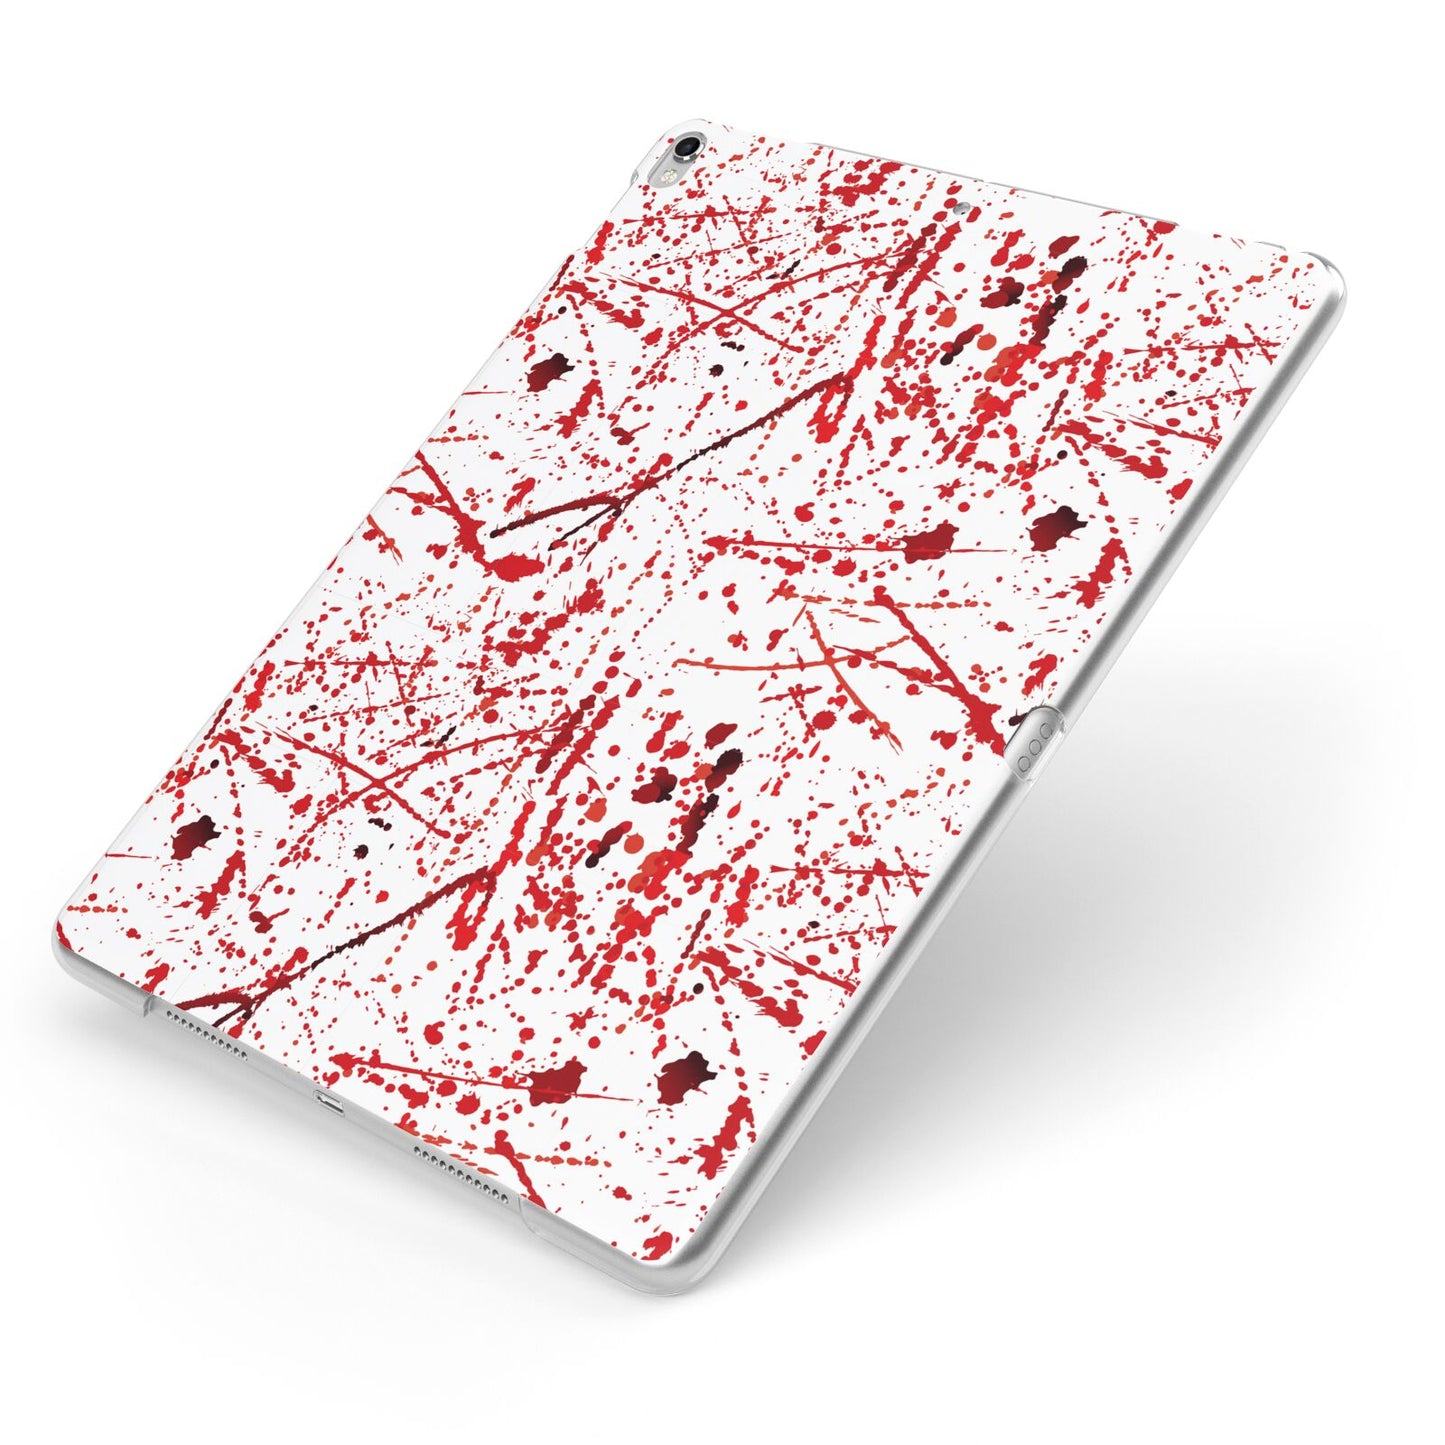 Blood Splatter Apple iPad Case on Silver iPad Side View